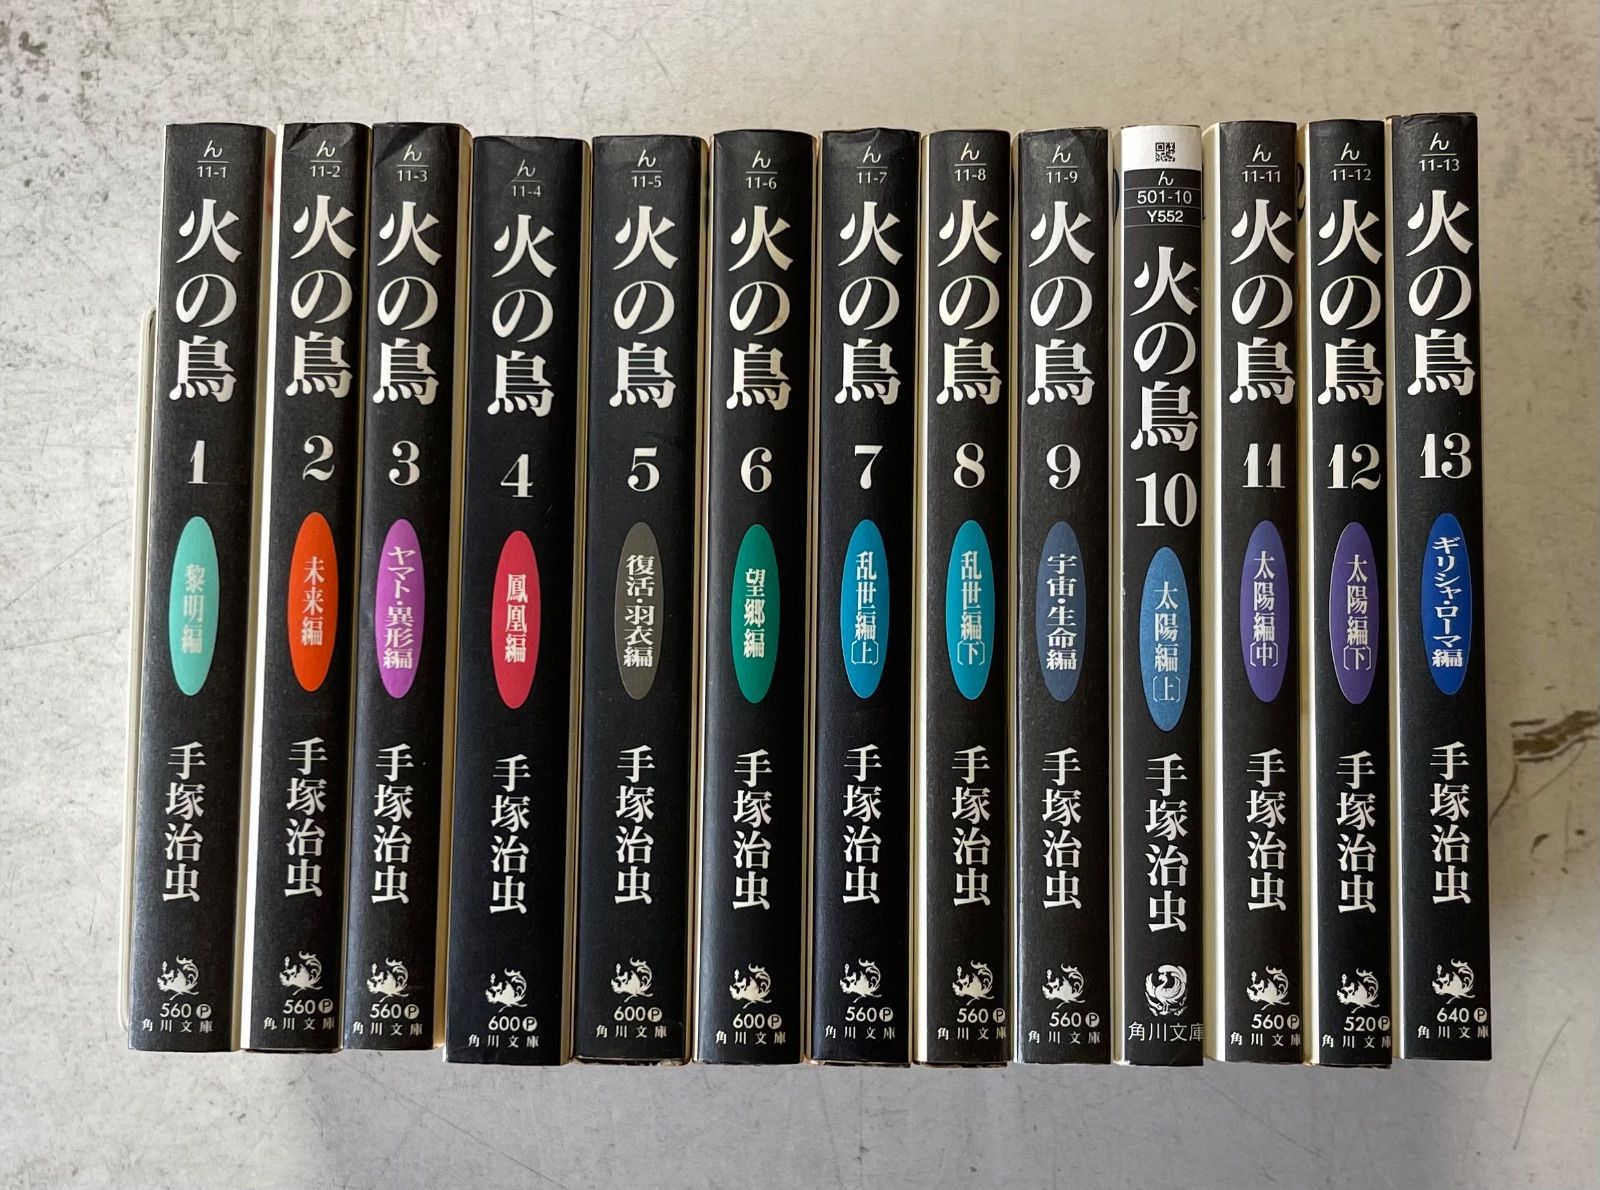 【RX012】 手塚治虫 火の鳥 文庫コミック 全13巻完結全巻セット 角川文庫